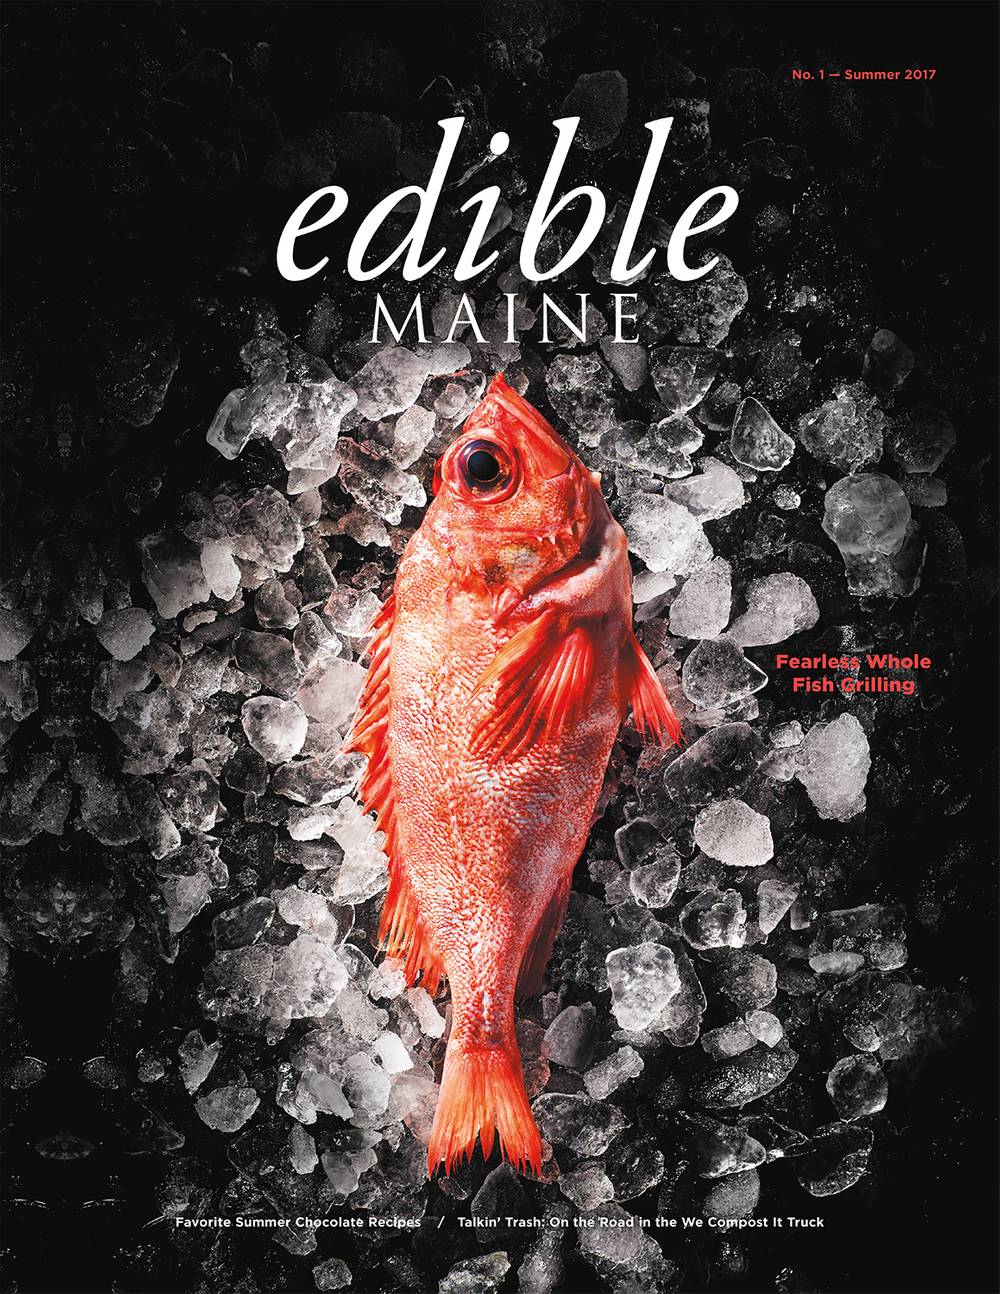 770 - Edible Maine big cover copy.jpg